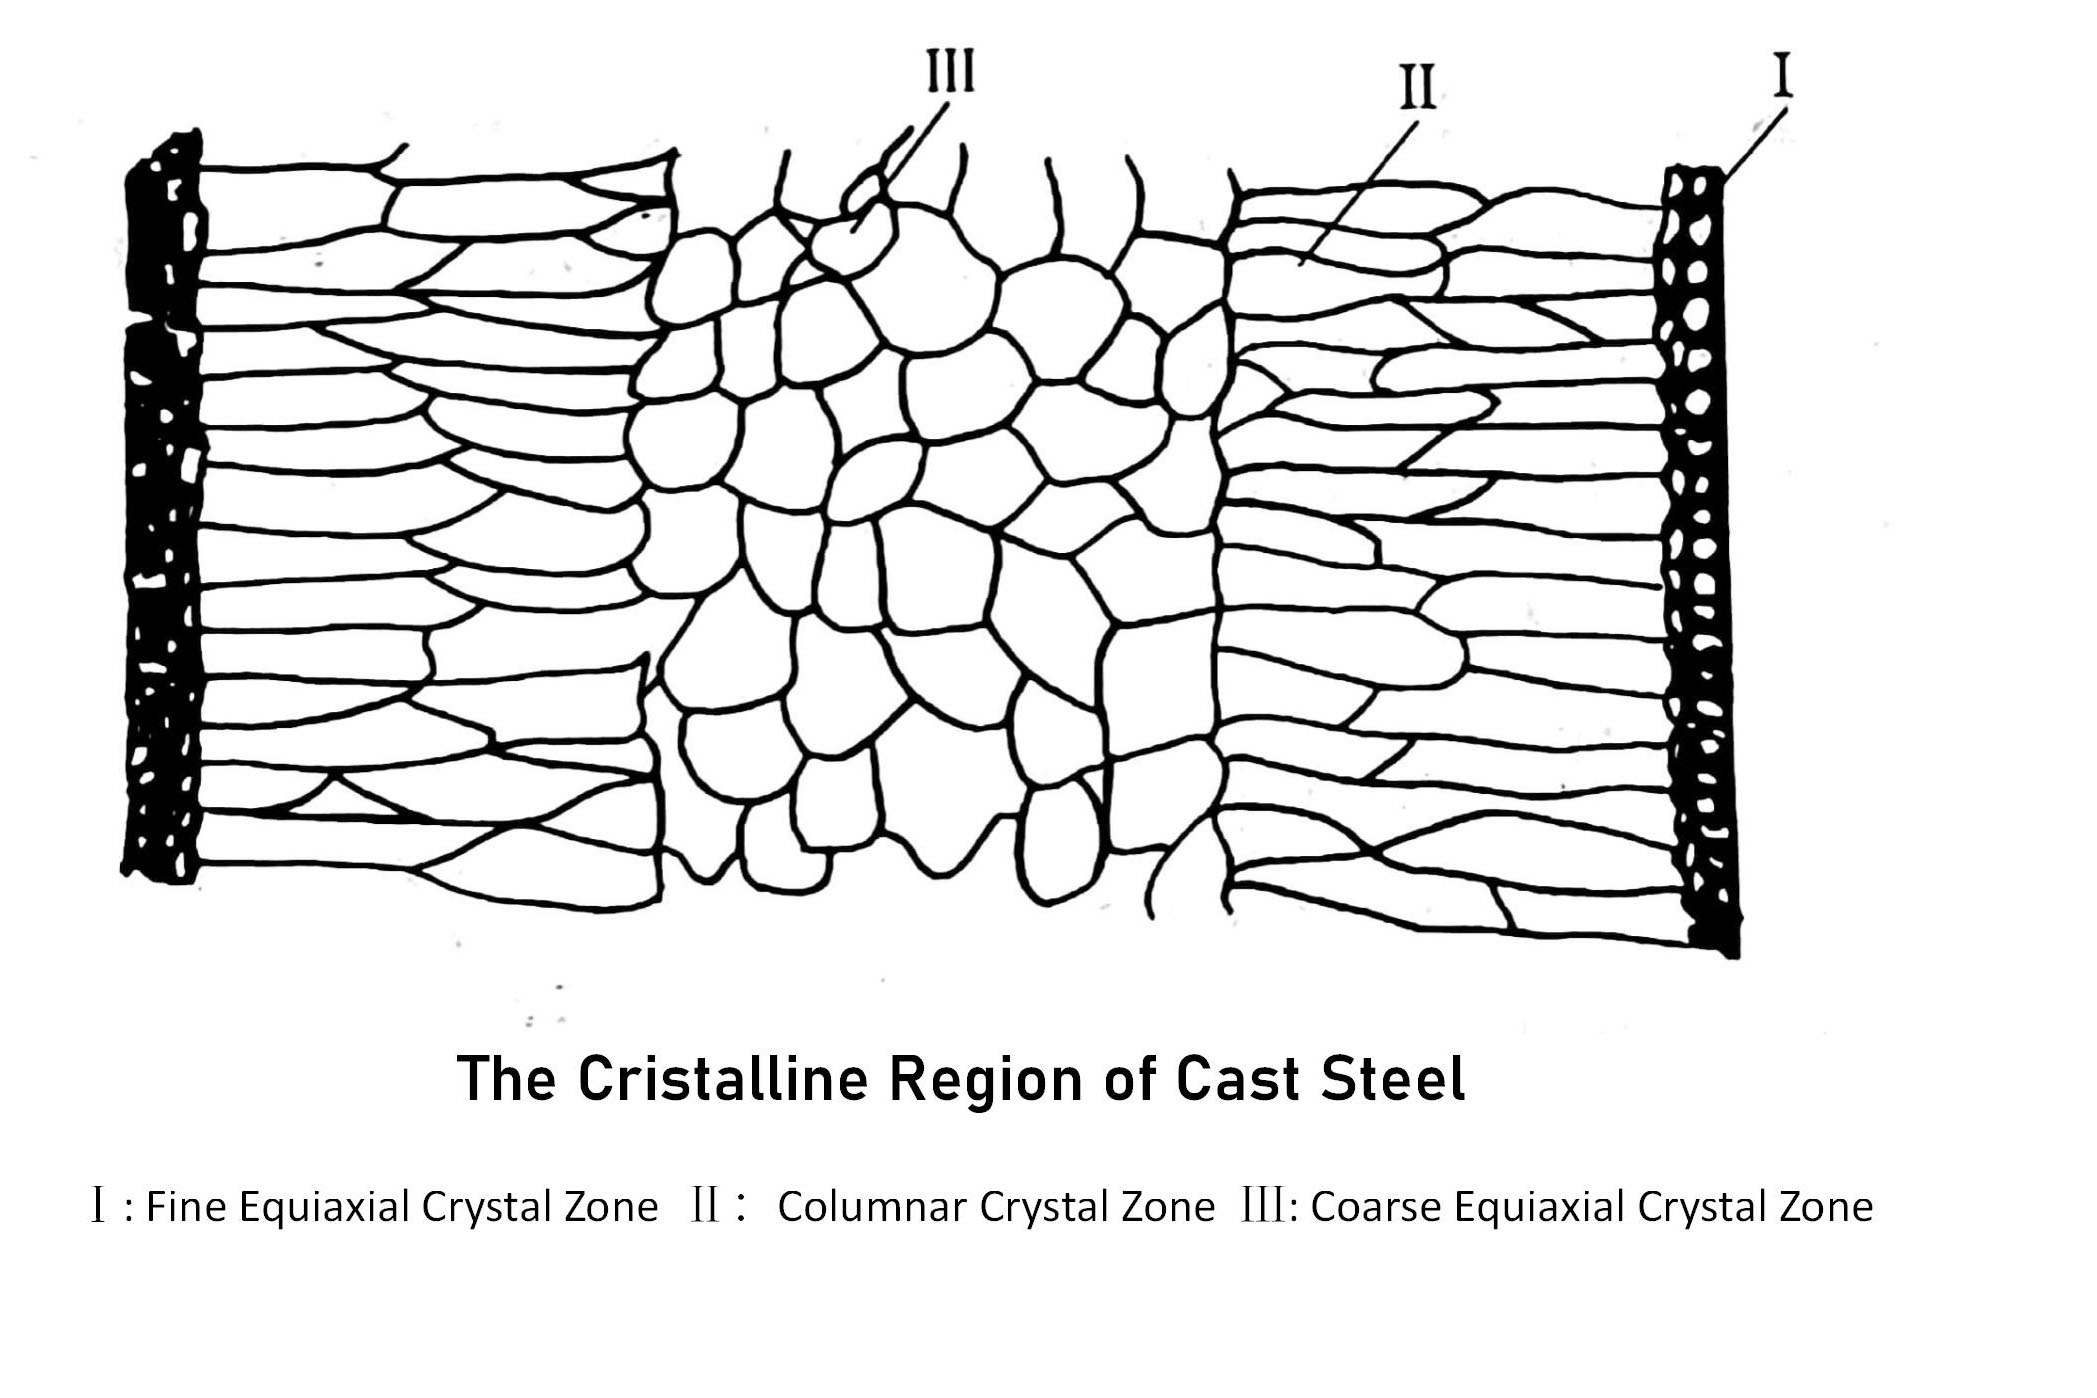 The Crystalline Region of Cast Steel